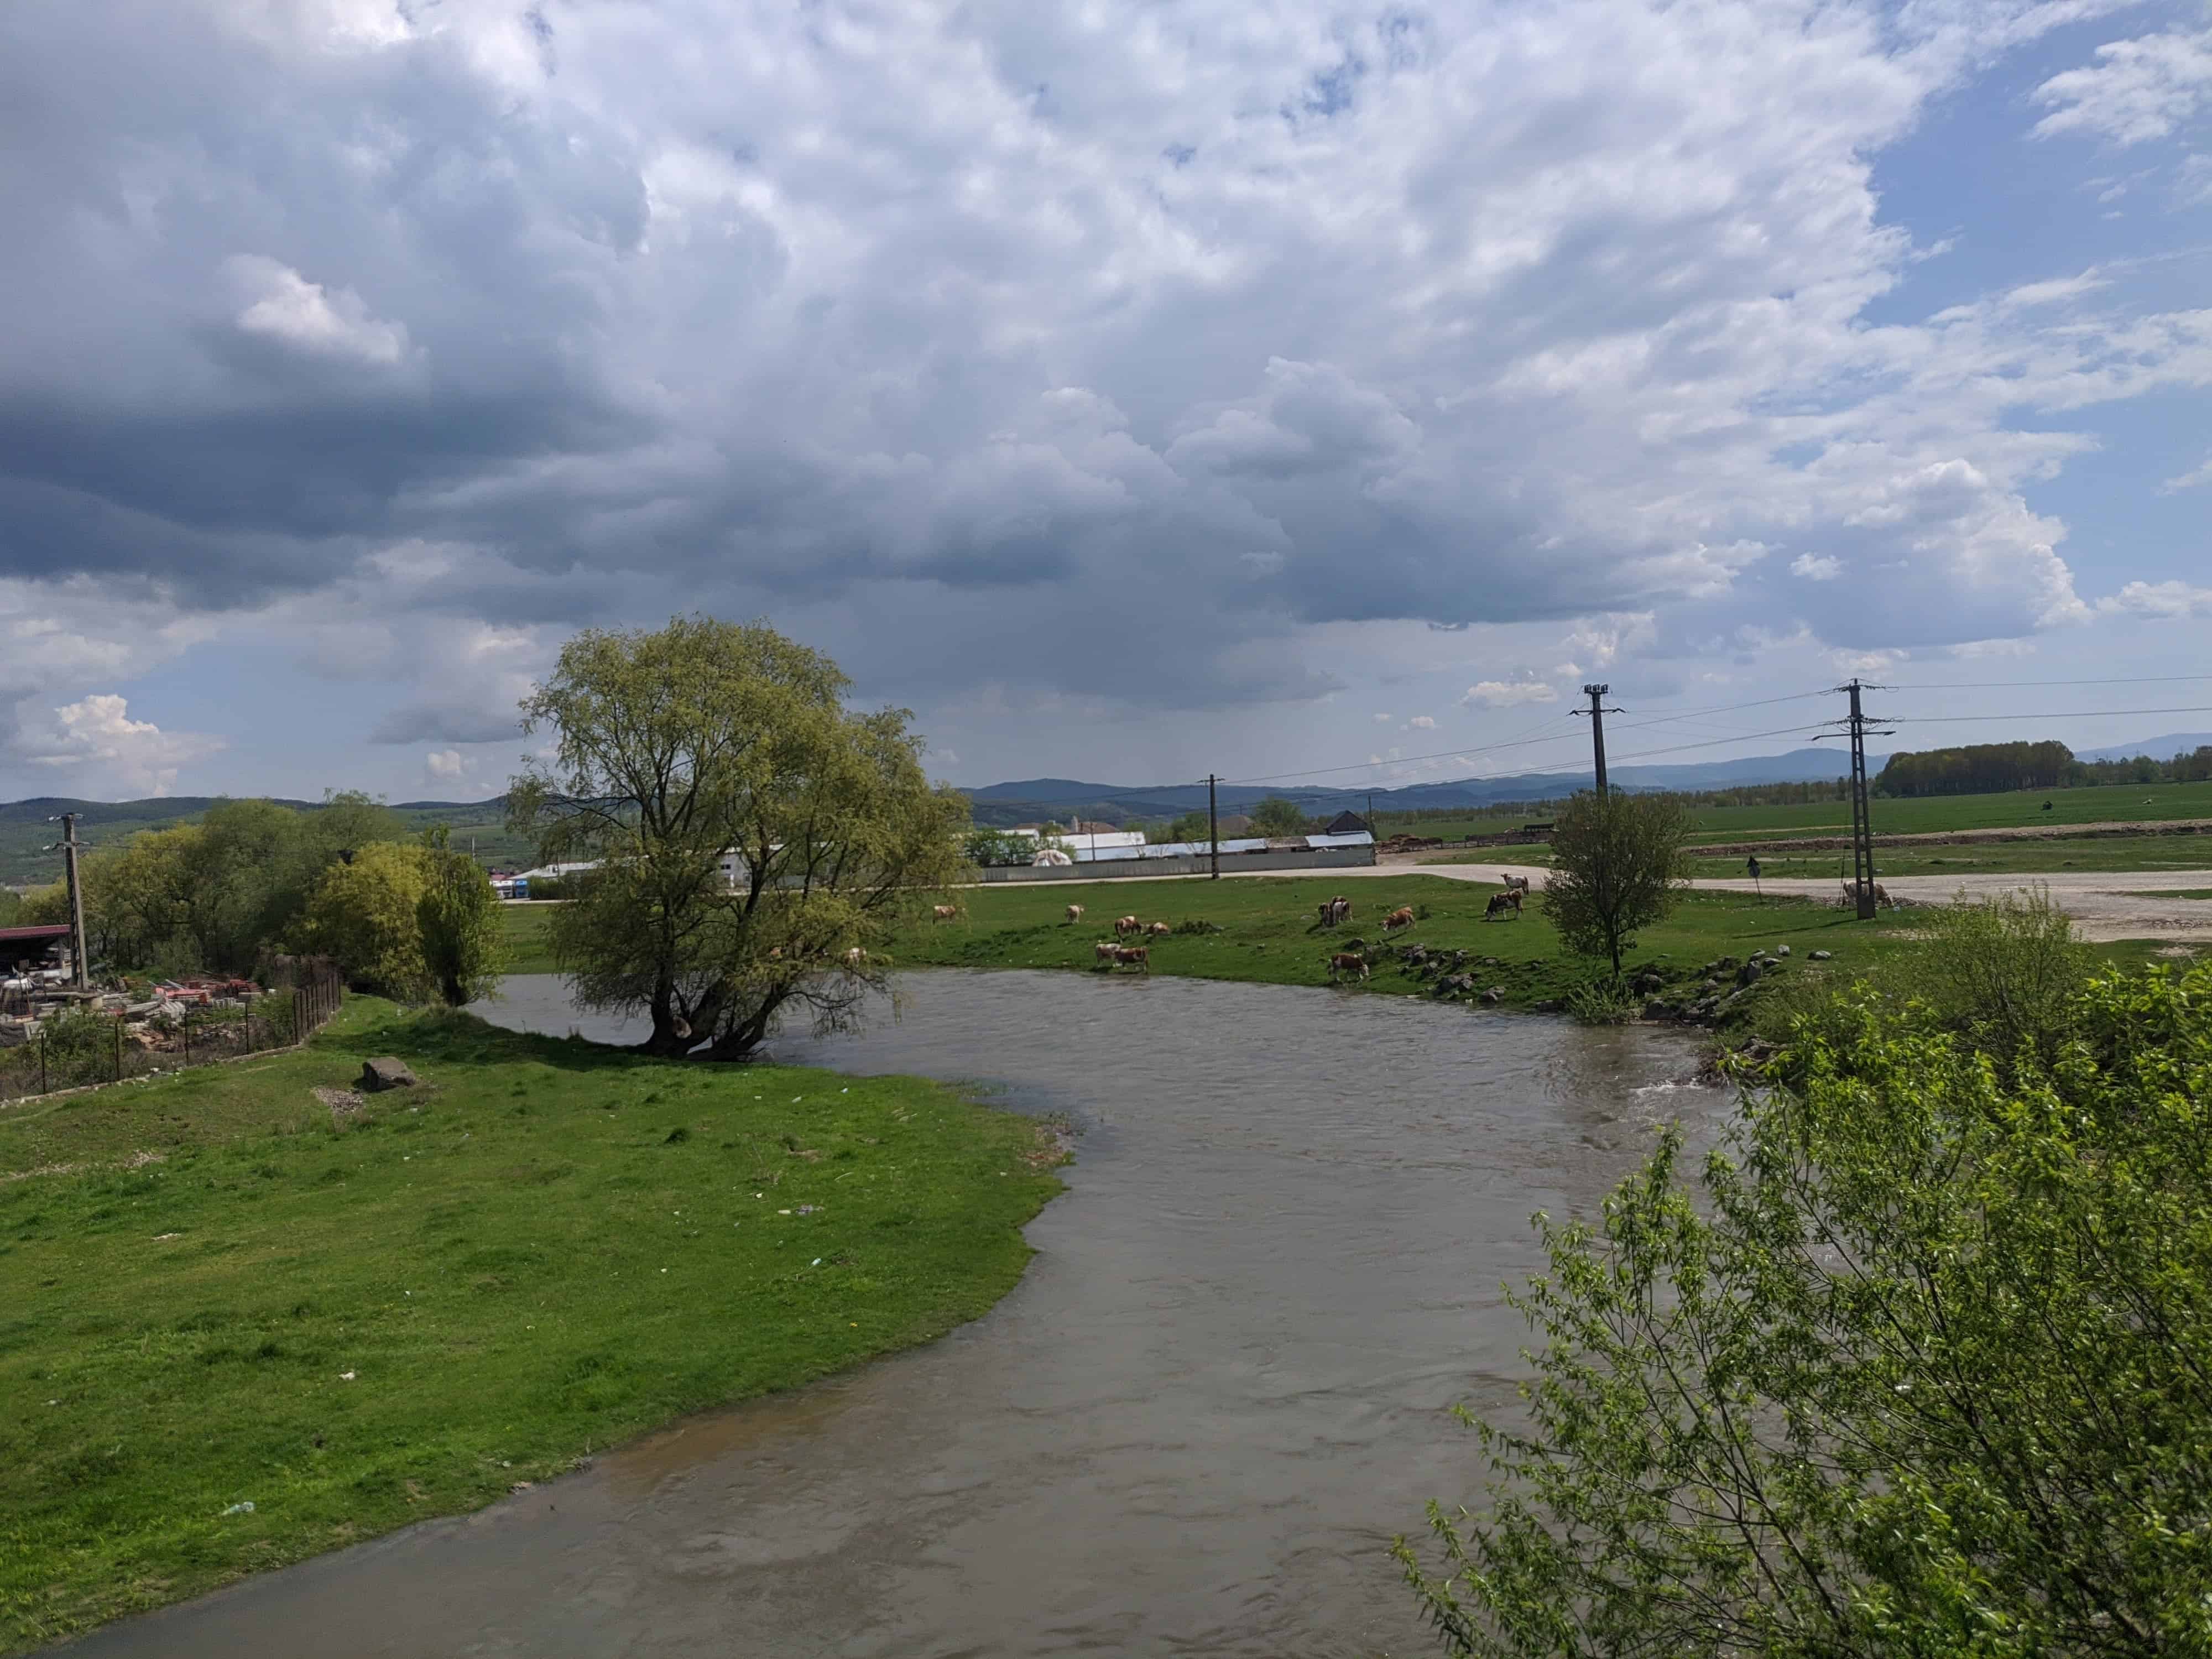 Following the same Crișul Repede river east towards Transylvania